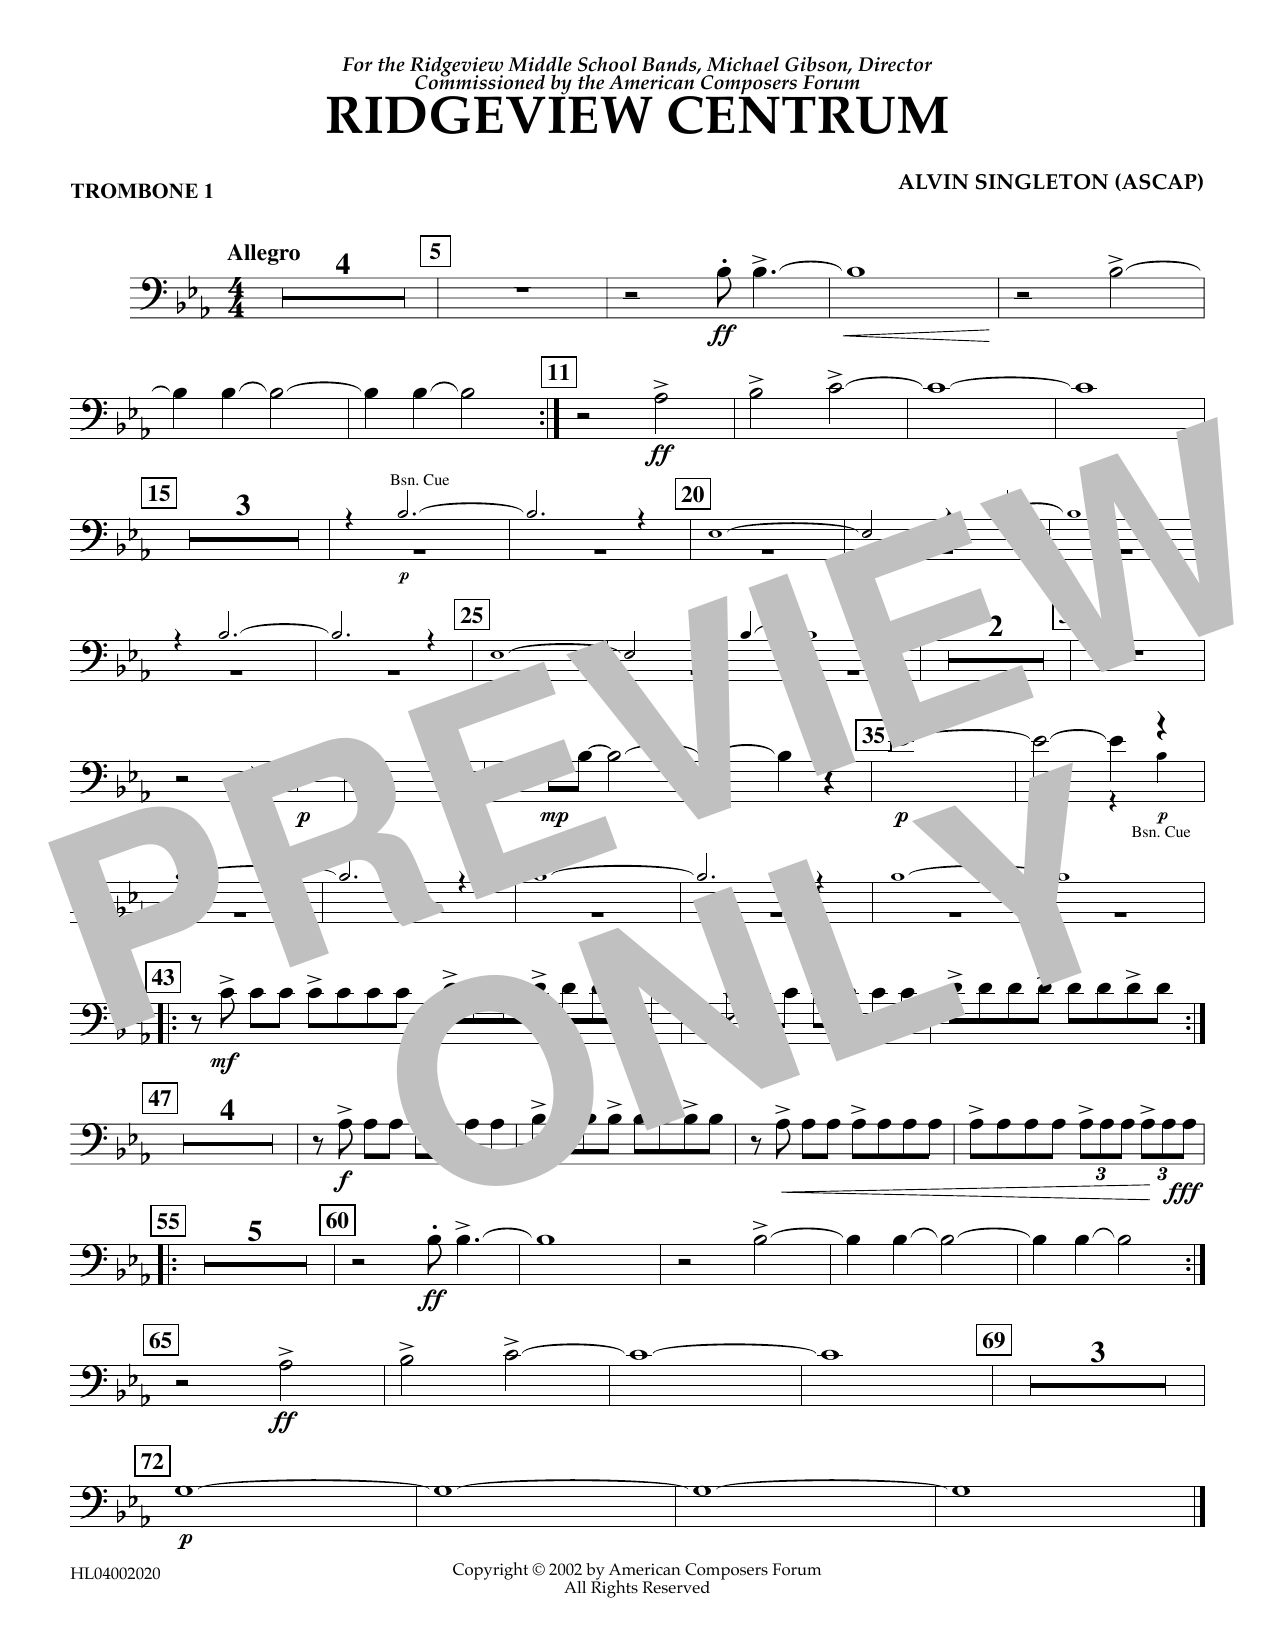 Alvin Singleton Ridgeview Centrum - Trombone 1 Sheet Music Notes & Chords for Concert Band - Download or Print PDF